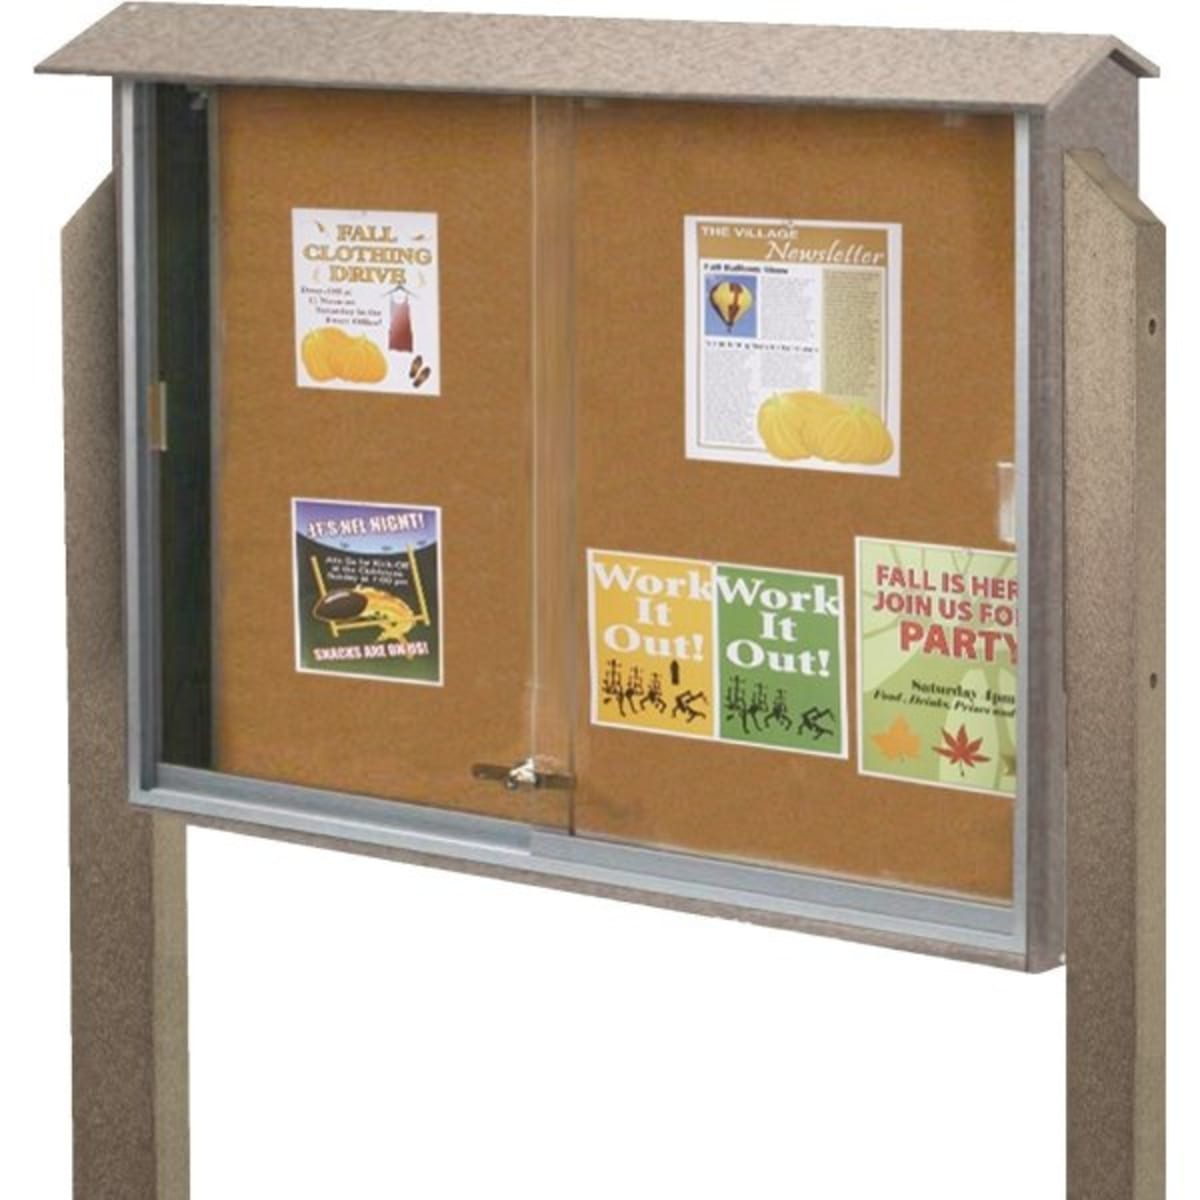 60x40 Sliding Doors Outdoor Letter Board Message Center Wall Mount